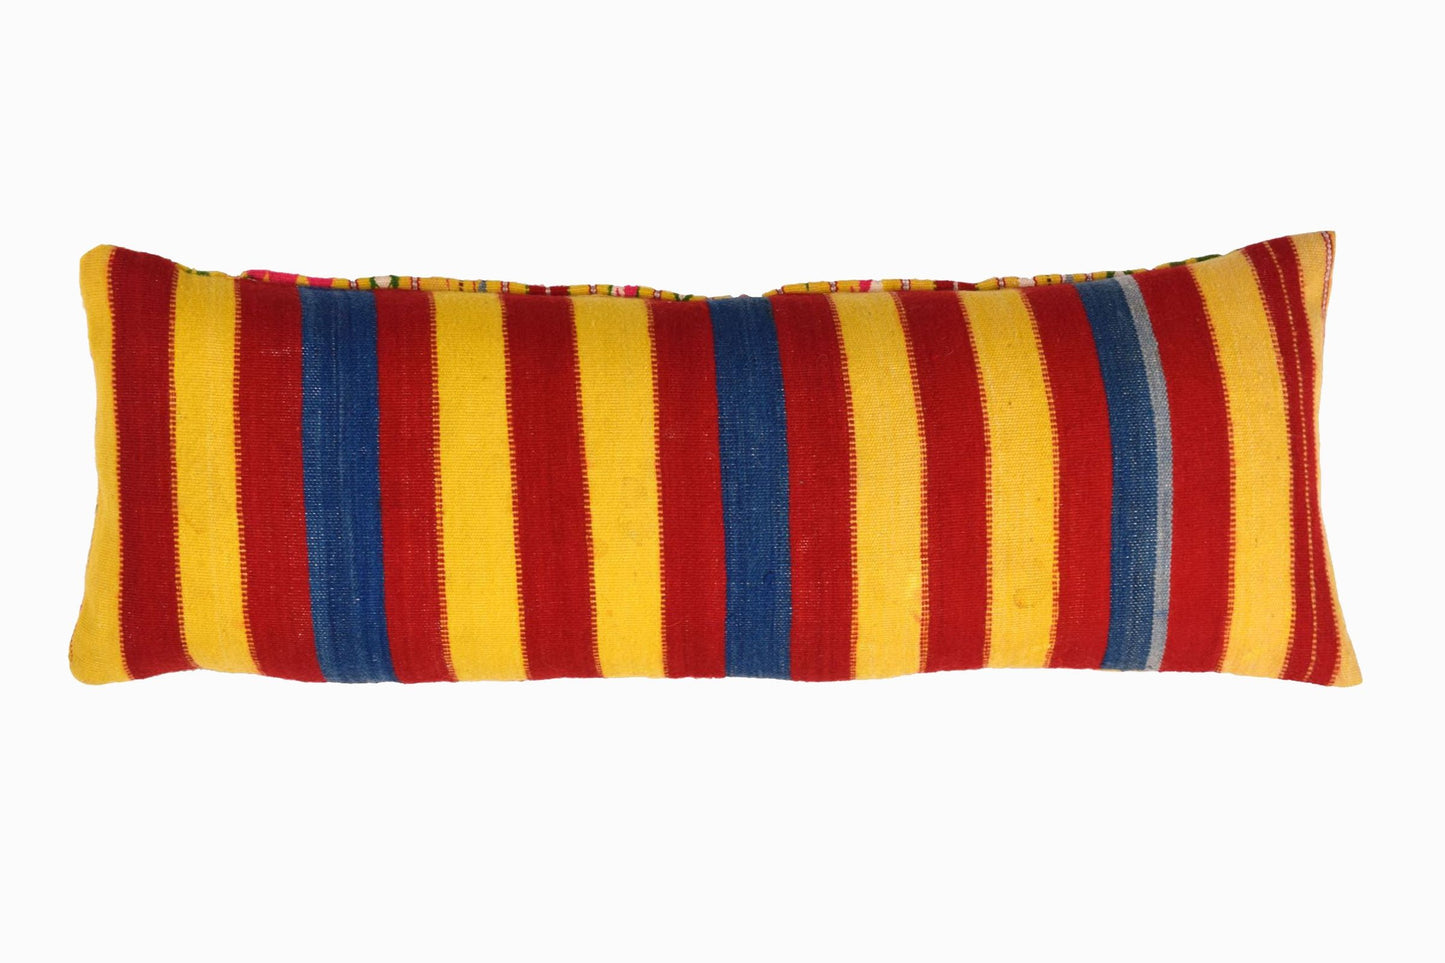 Cojín de lana sudamericana tejido a mano